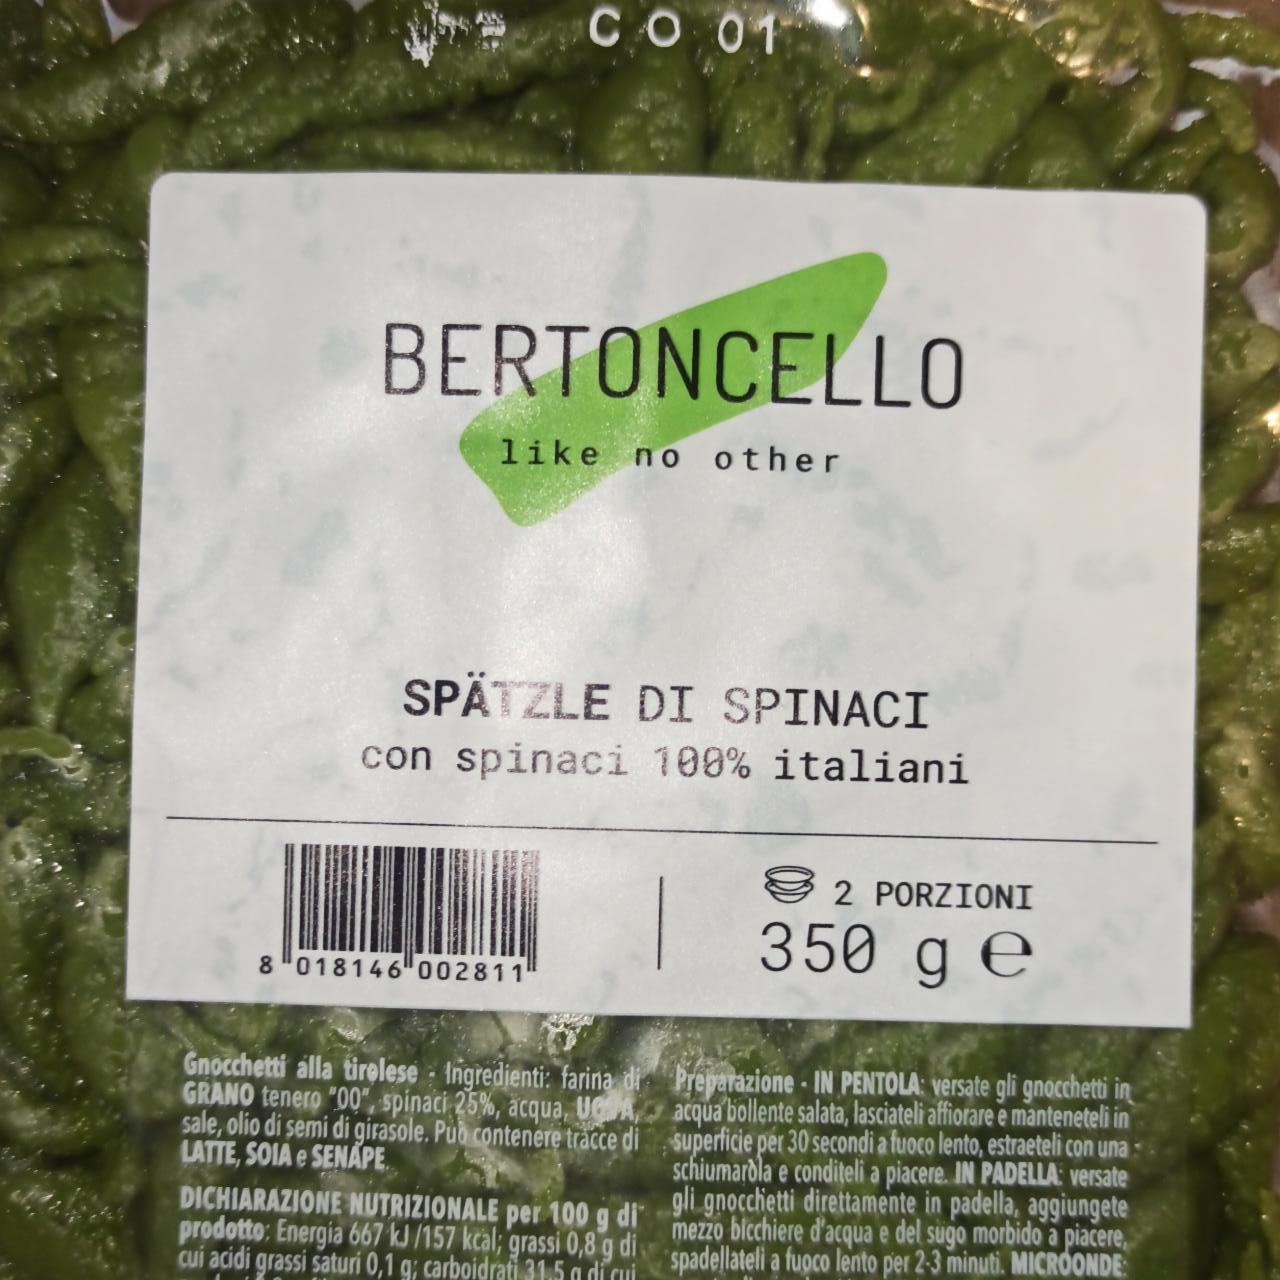 Zdjęcia - Spatzle di spinaci Bertoncello